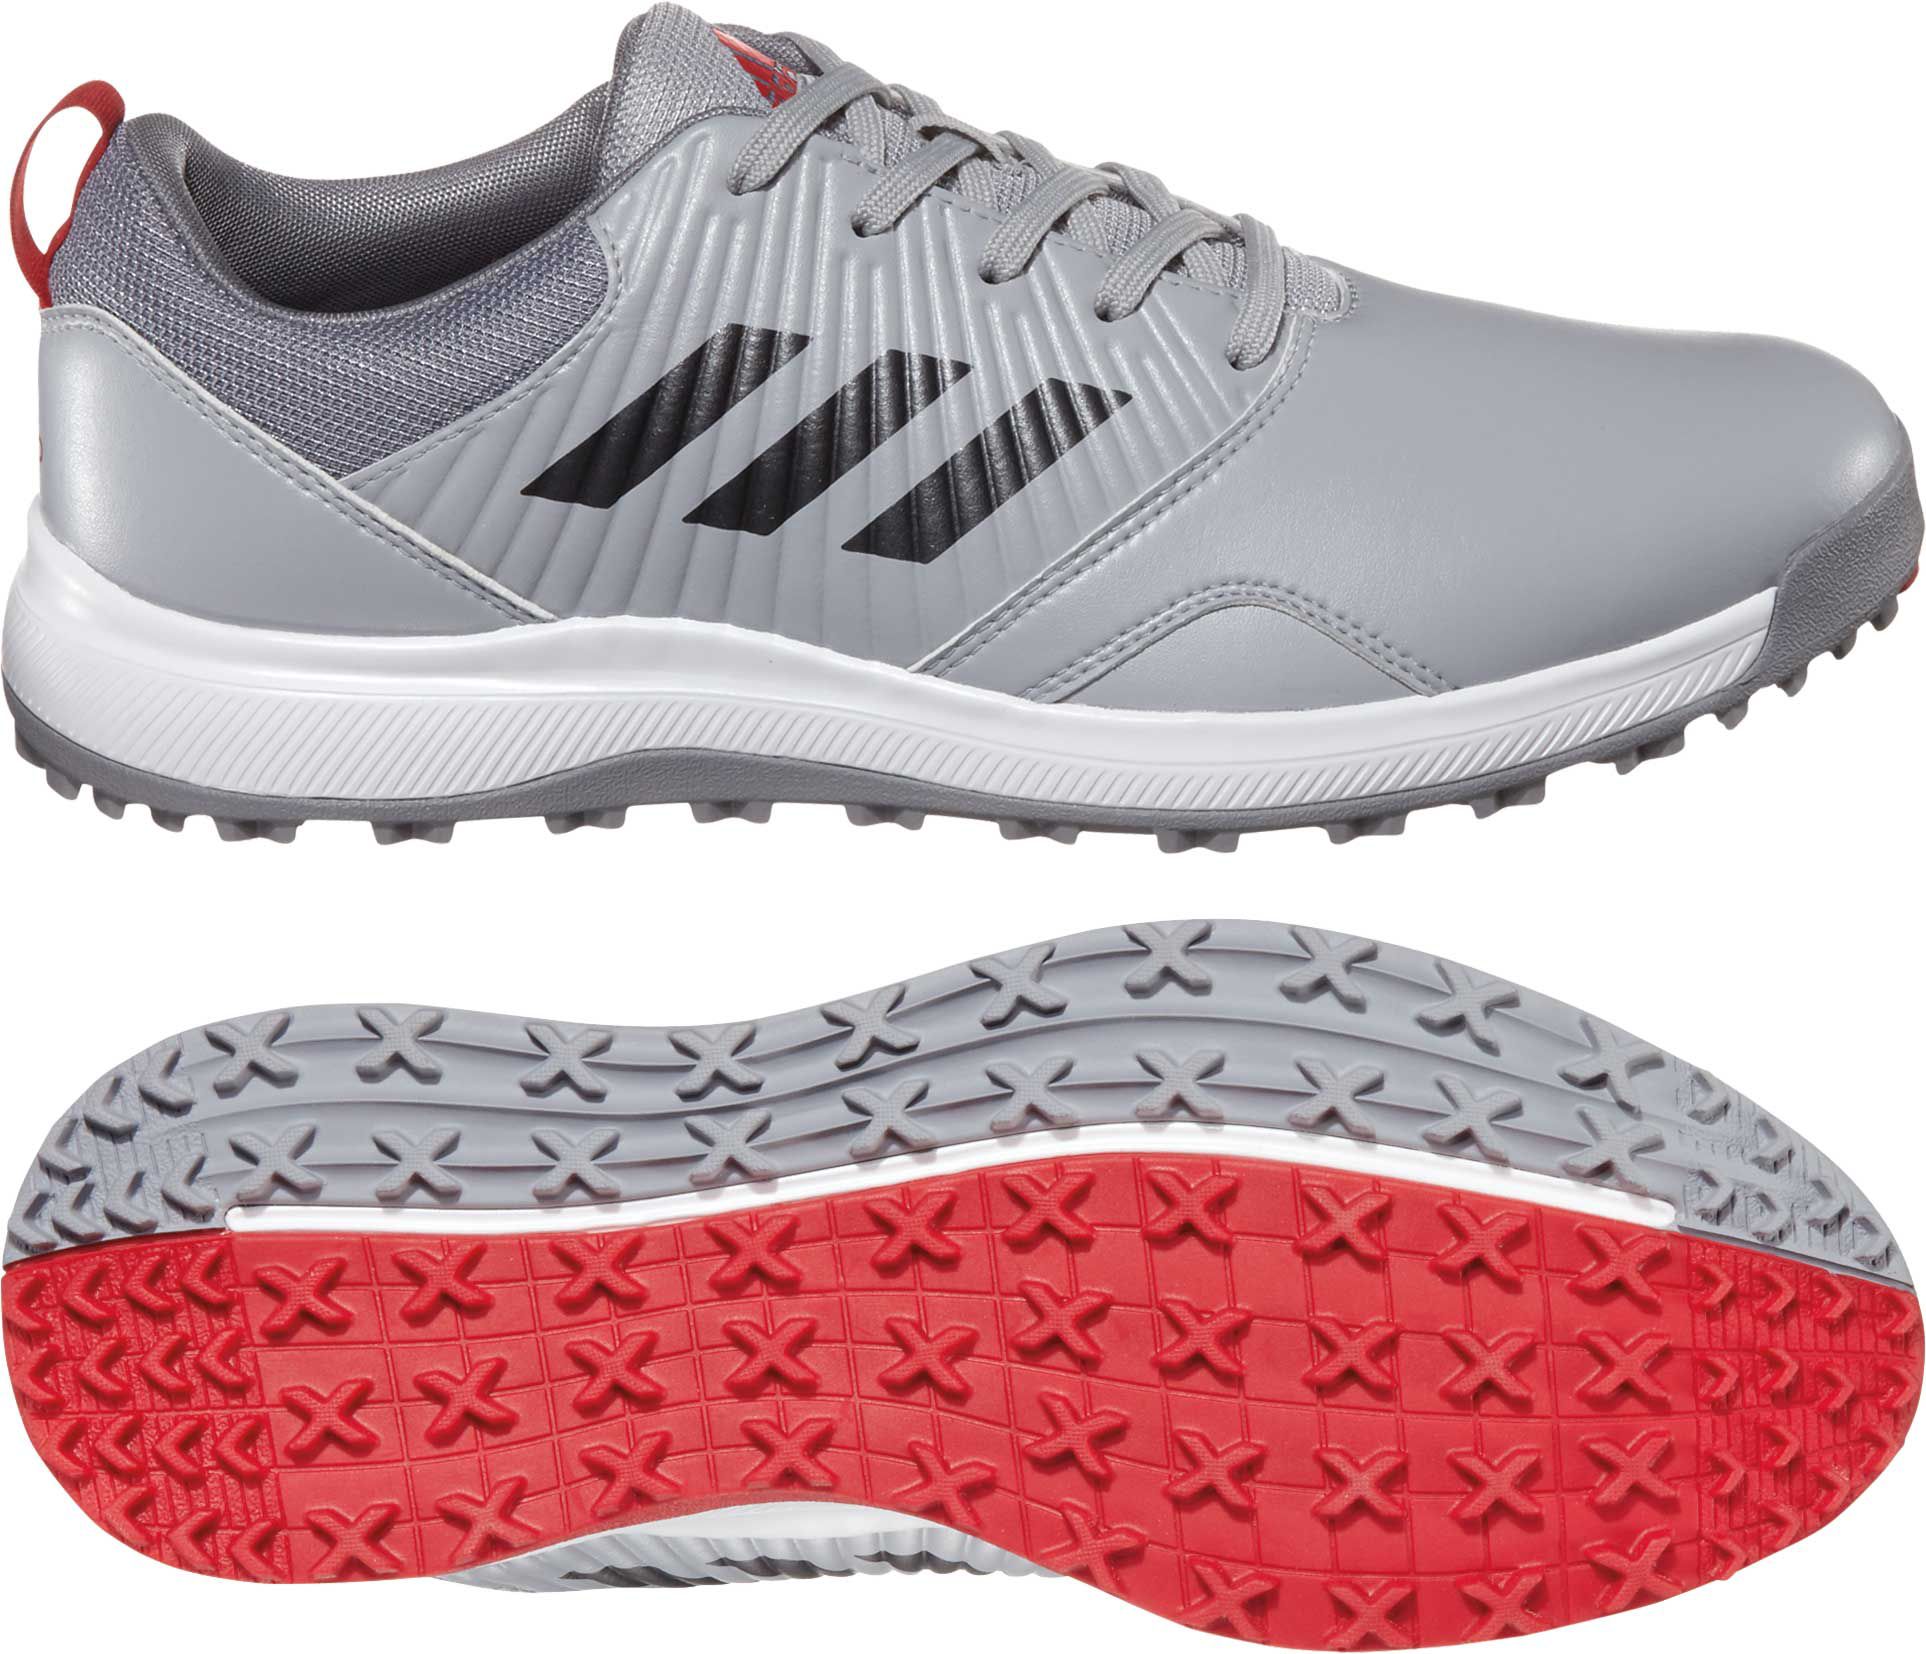 adidas Golf Shoes - Spiked \u0026 Spikeless 